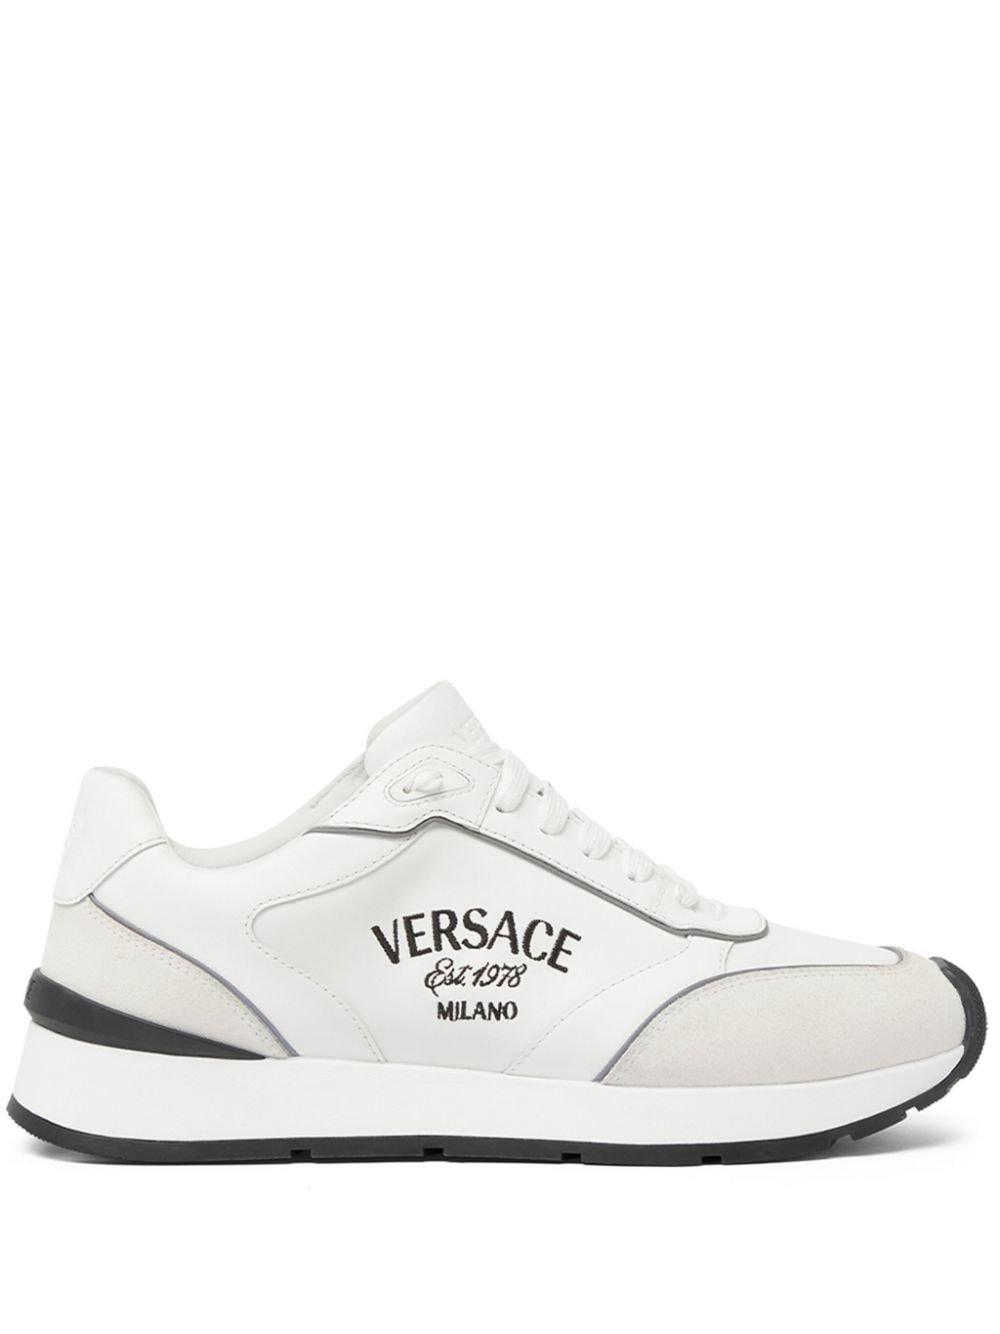 Versace Milano Sneakers - Weiß von Versace